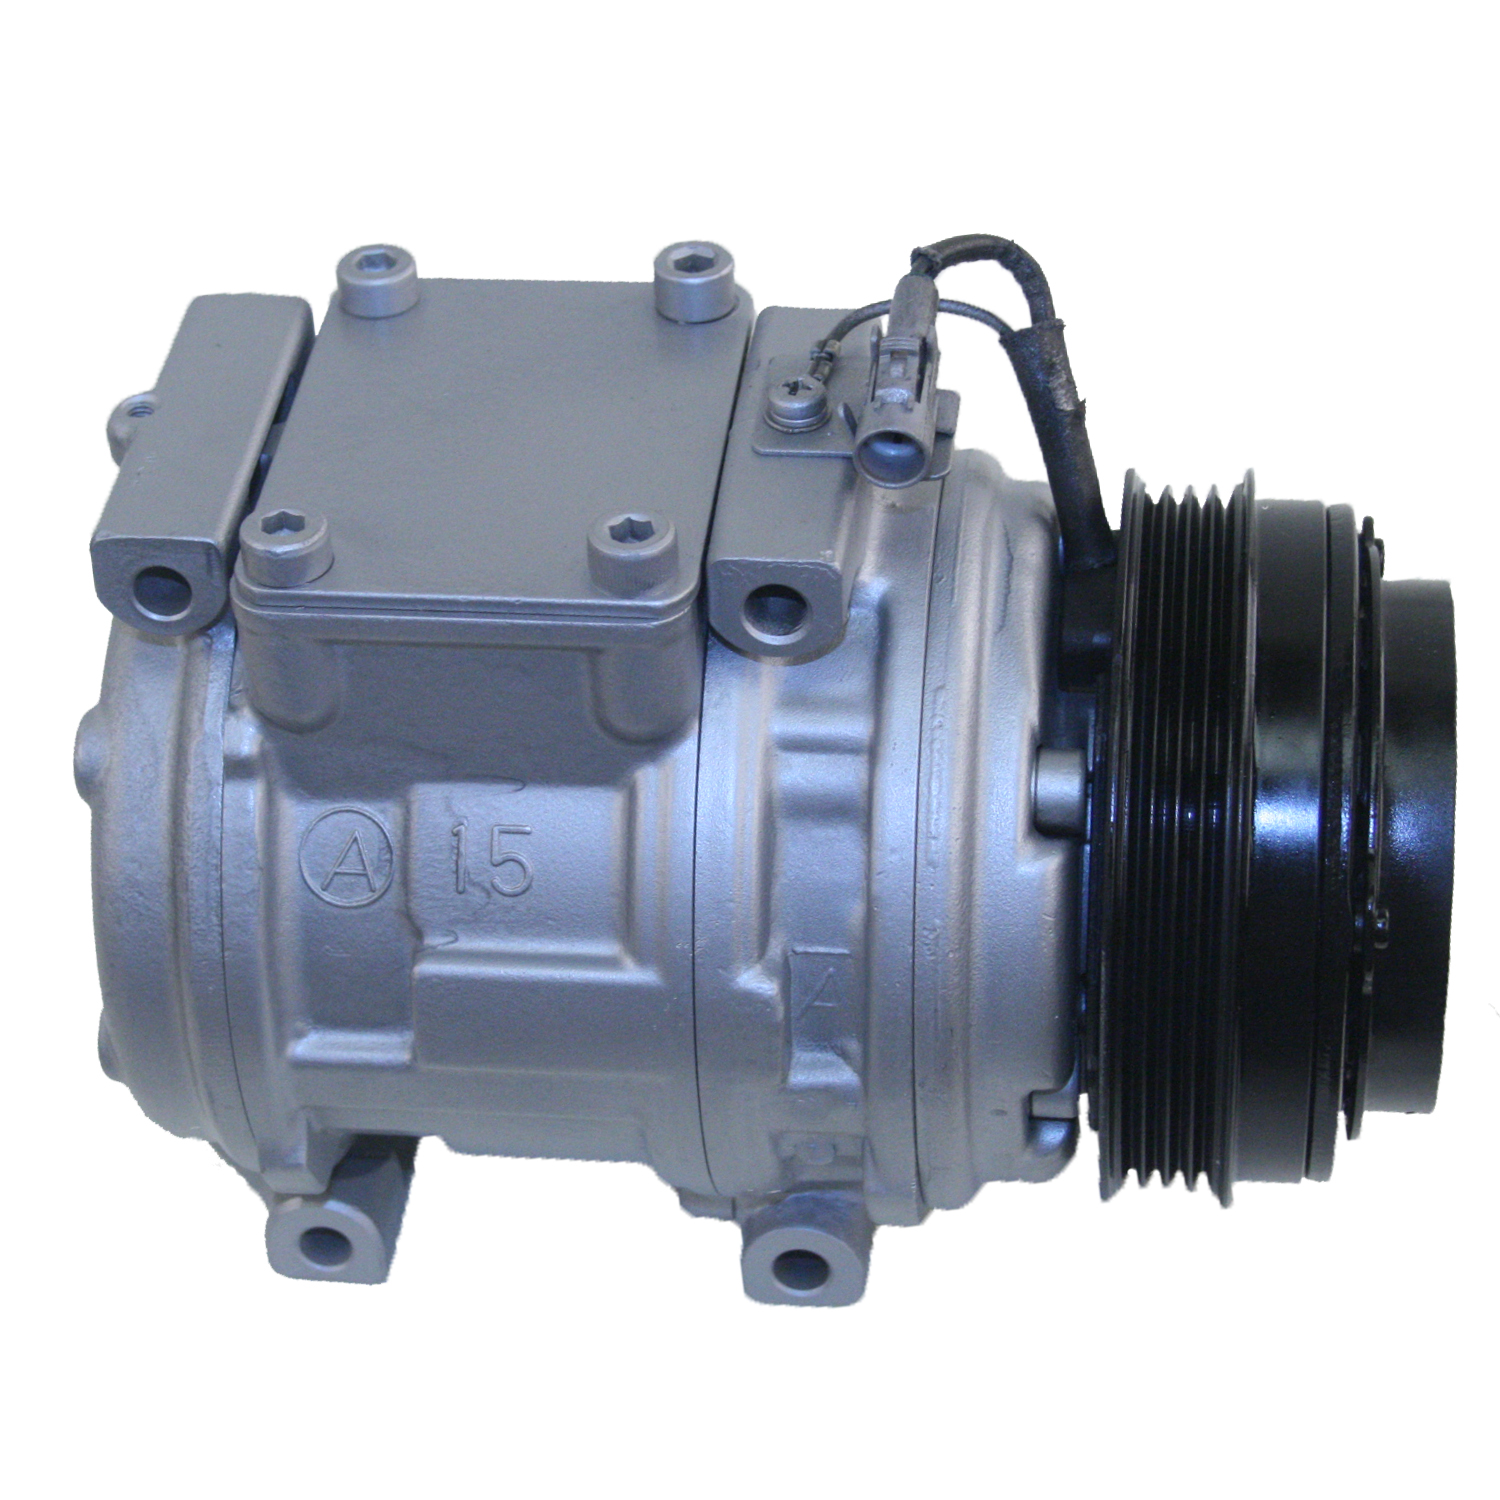 TCW Compressor 31210.407 Remanufactured Product Image field_60b6a13a6e67c